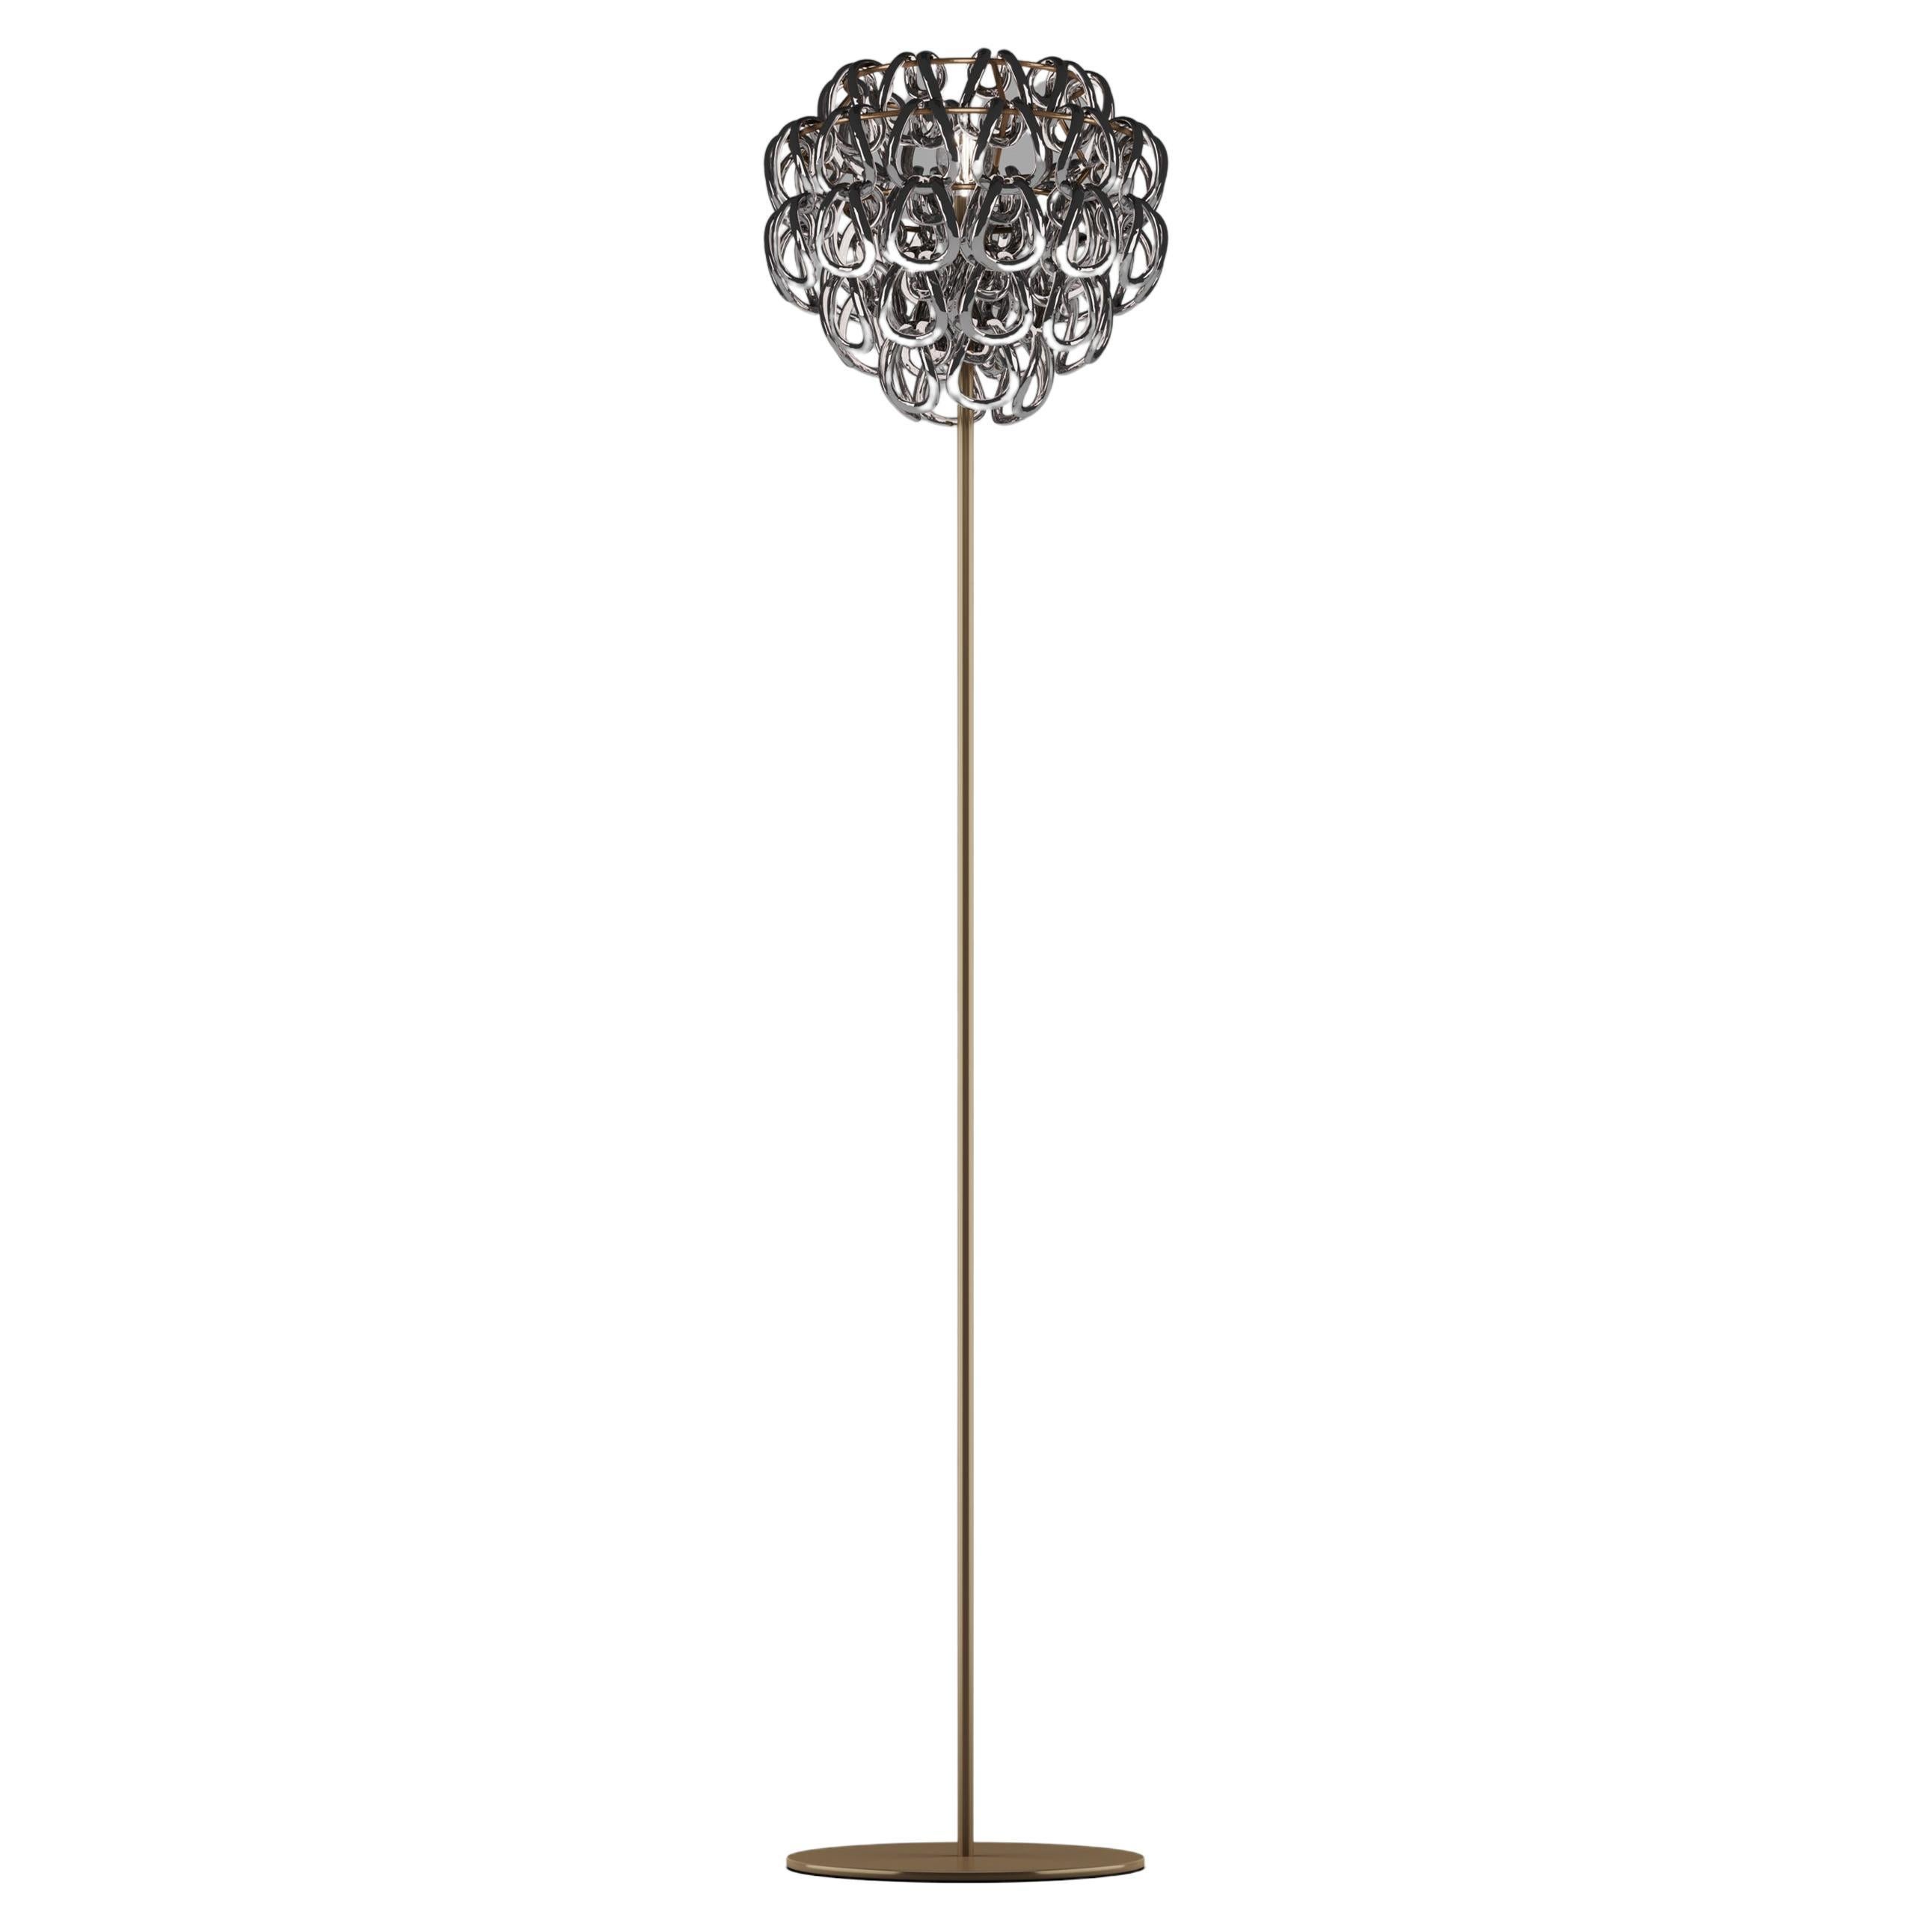 Vistosi Giogali Floor Lamp in Crystal Black Nickel with Matt Bronze Frame For Sale